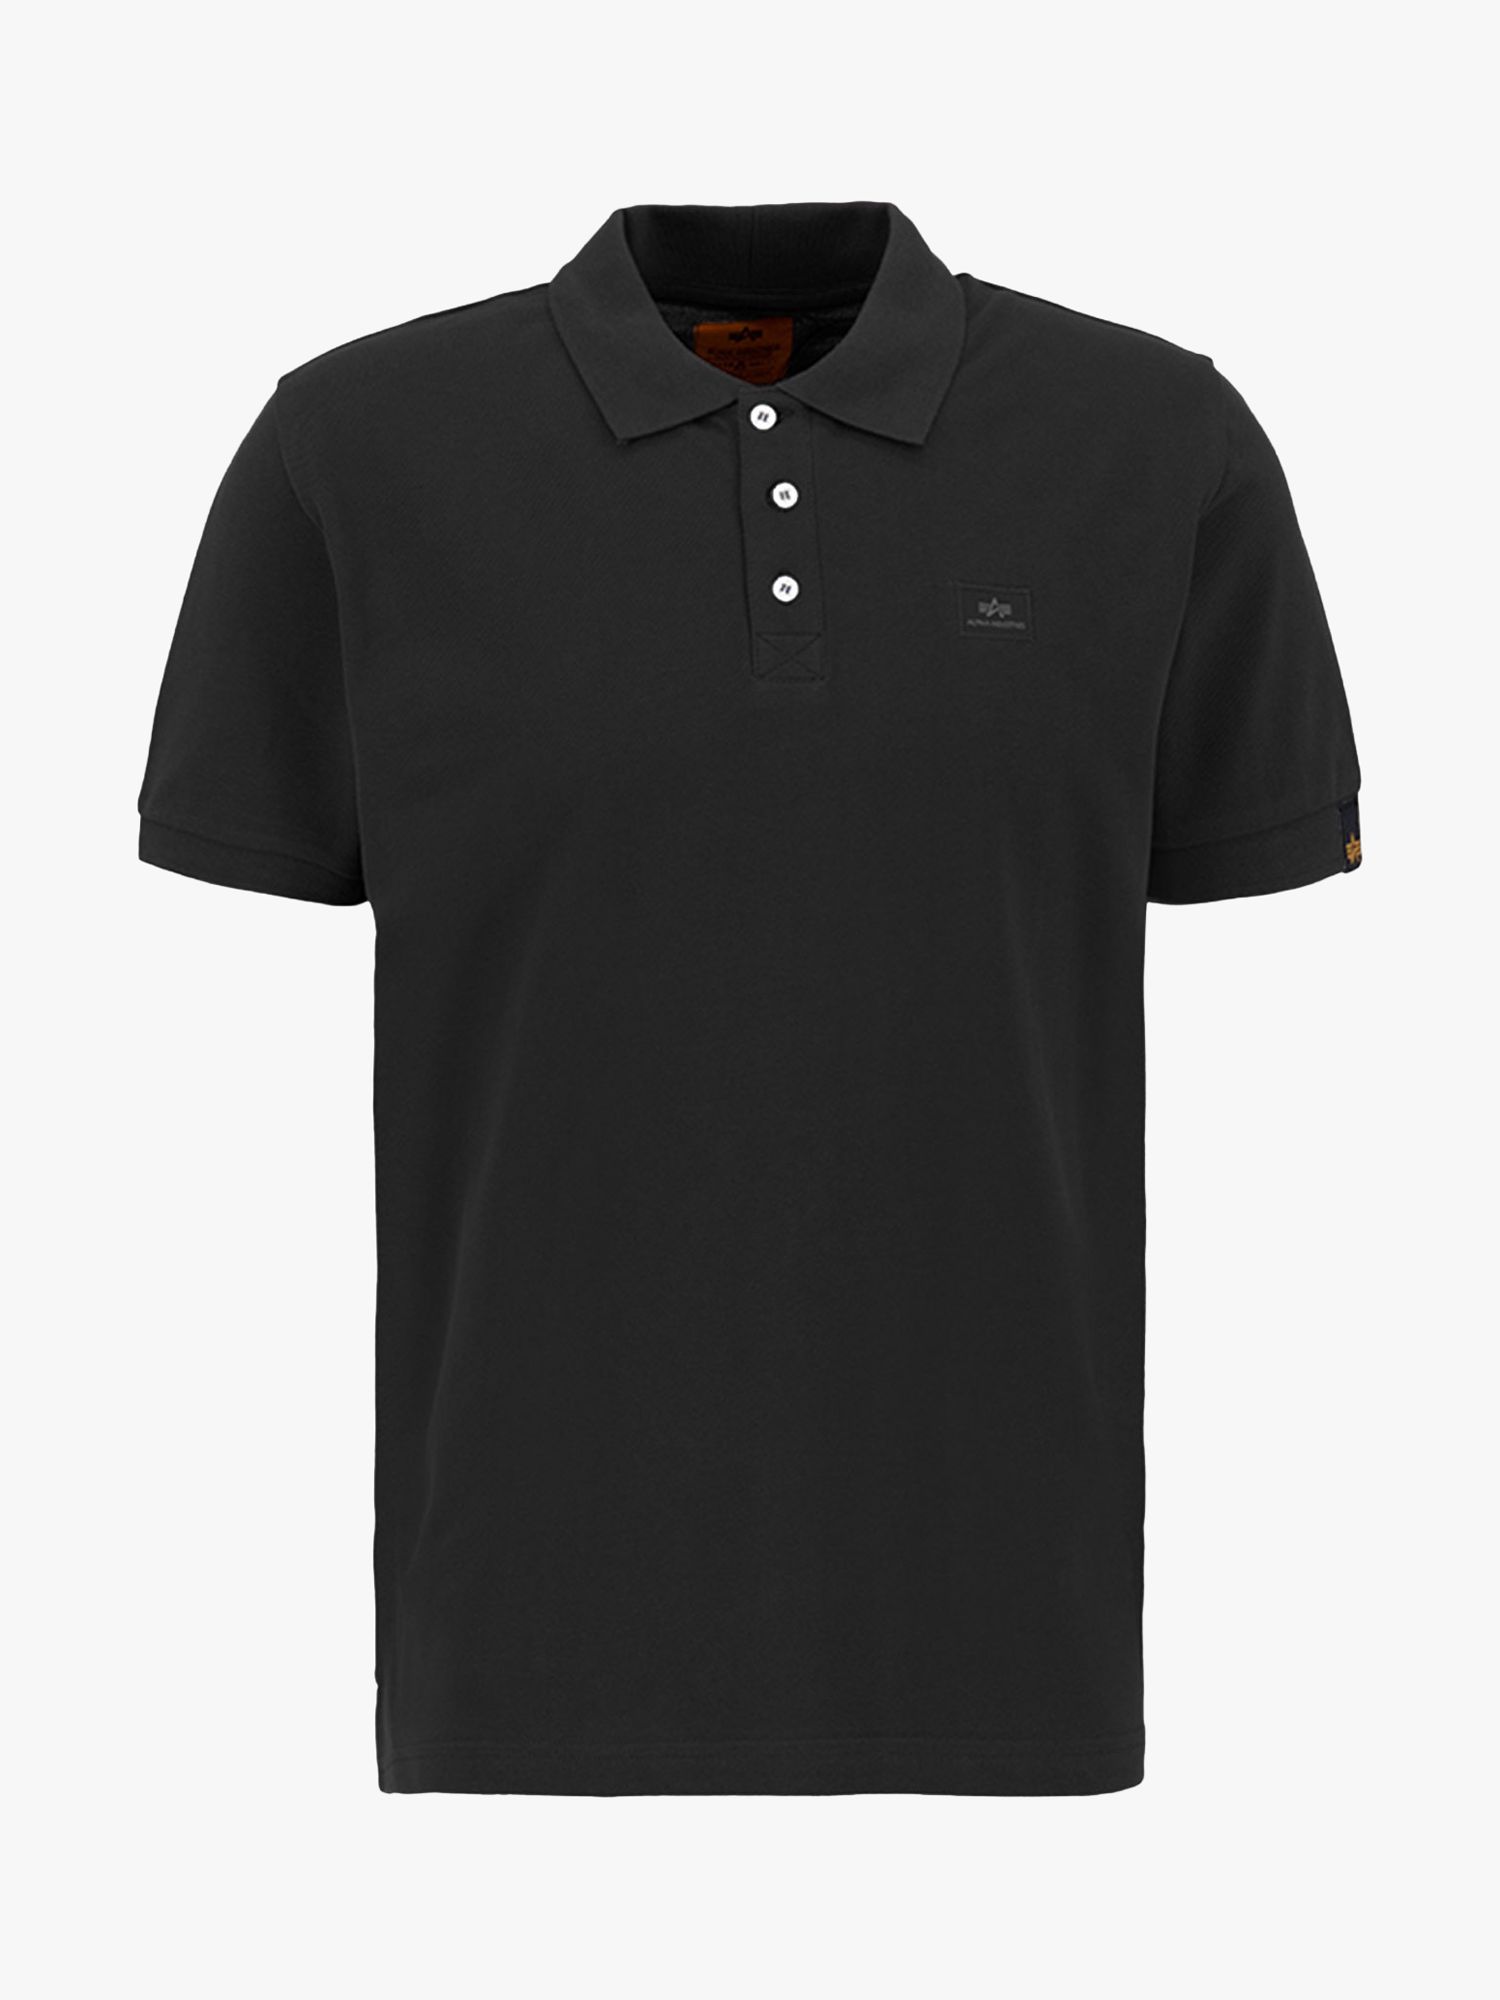 Alpha Industries X-Fit Polo Shirt, 03 Black, S